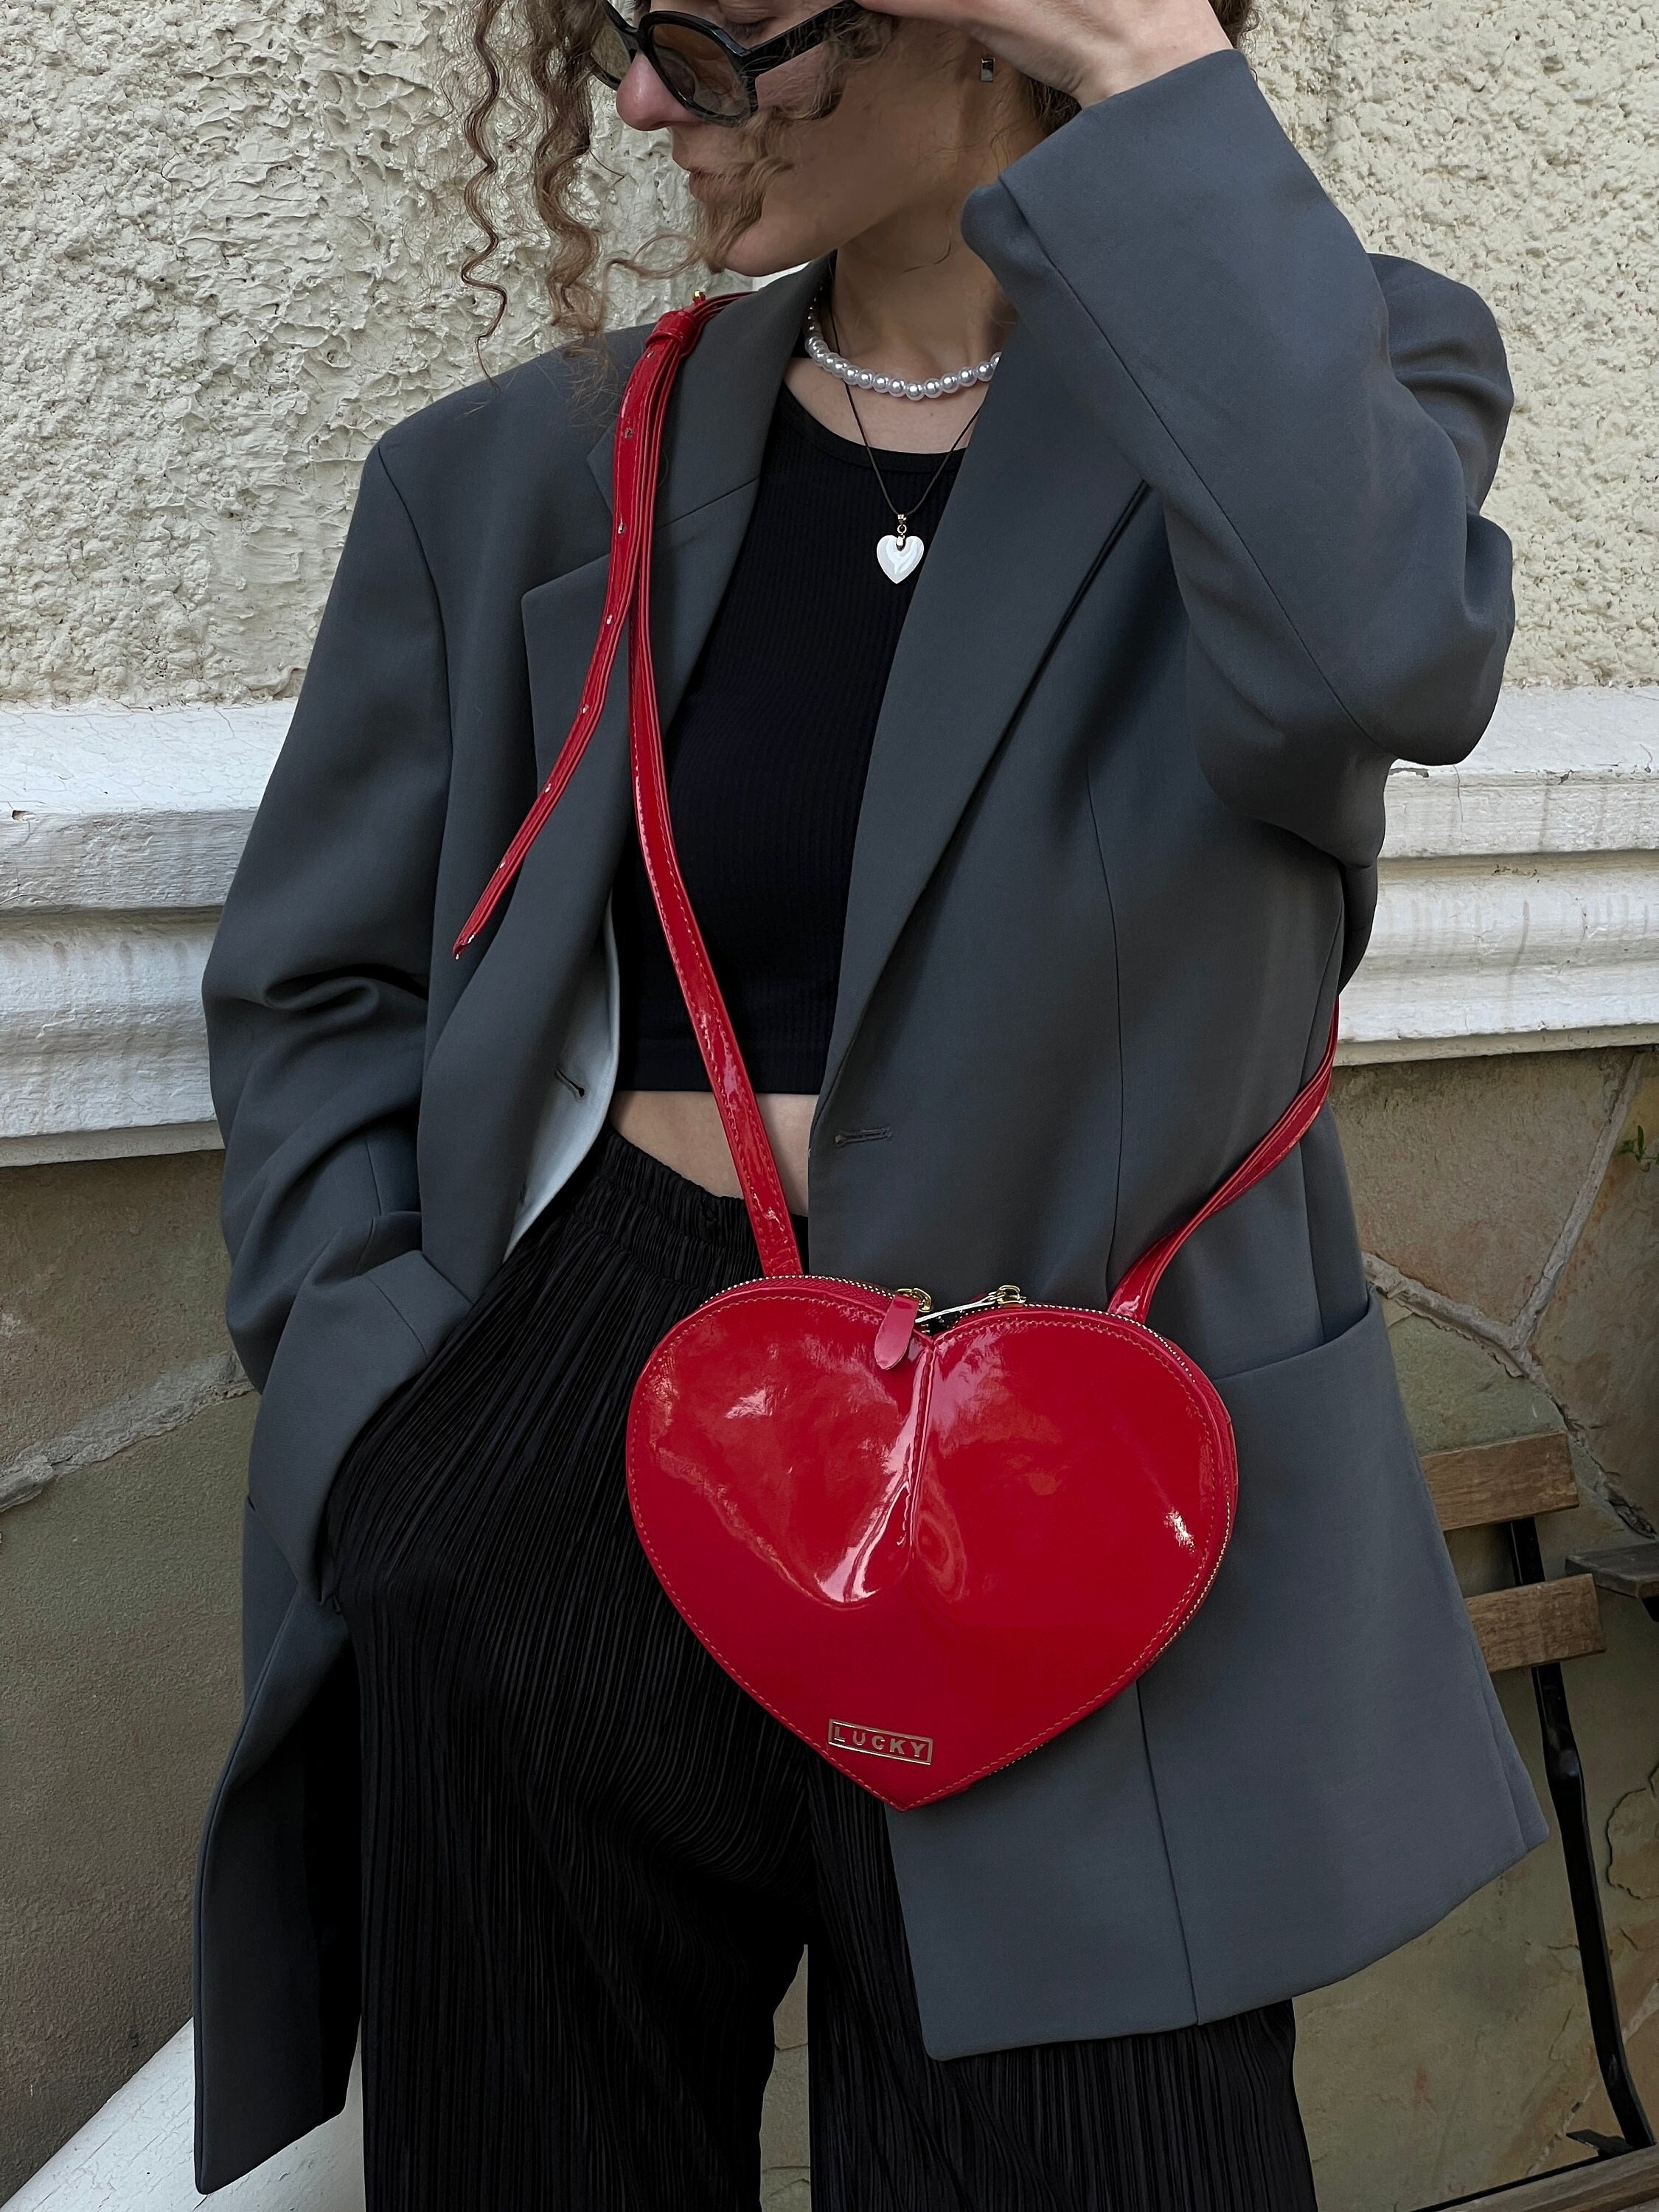 Women's High-grade Mirror Surface Love Heart Shaped Shoulder Bag, Hipster  Design Cross-body Bag